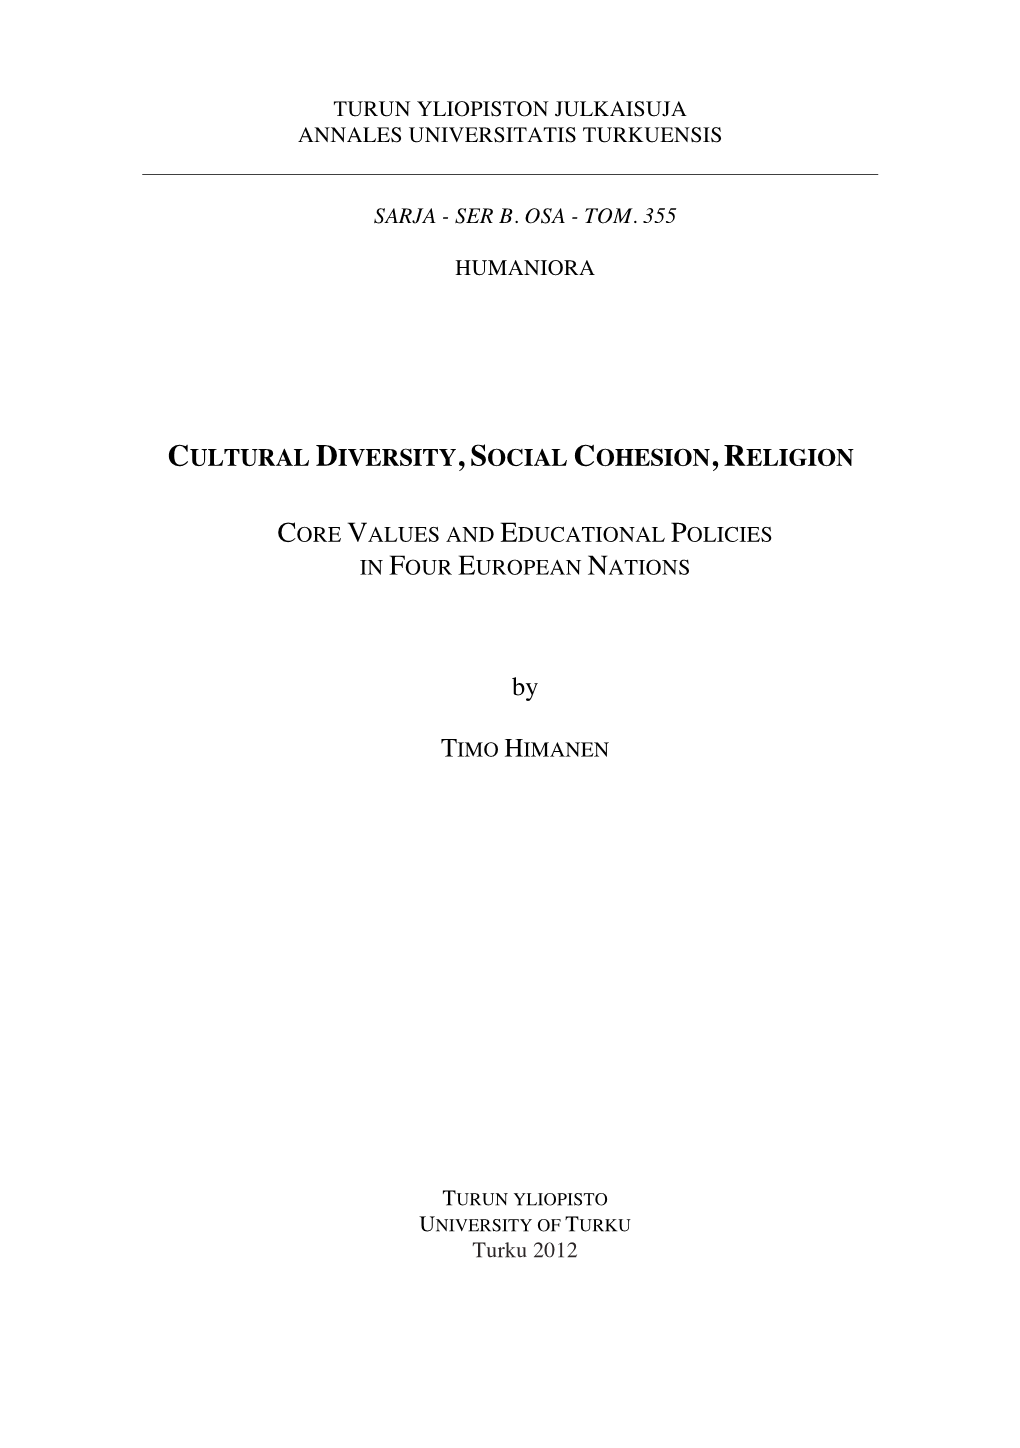 Cultural Diversity, Social Cohesion, Religion